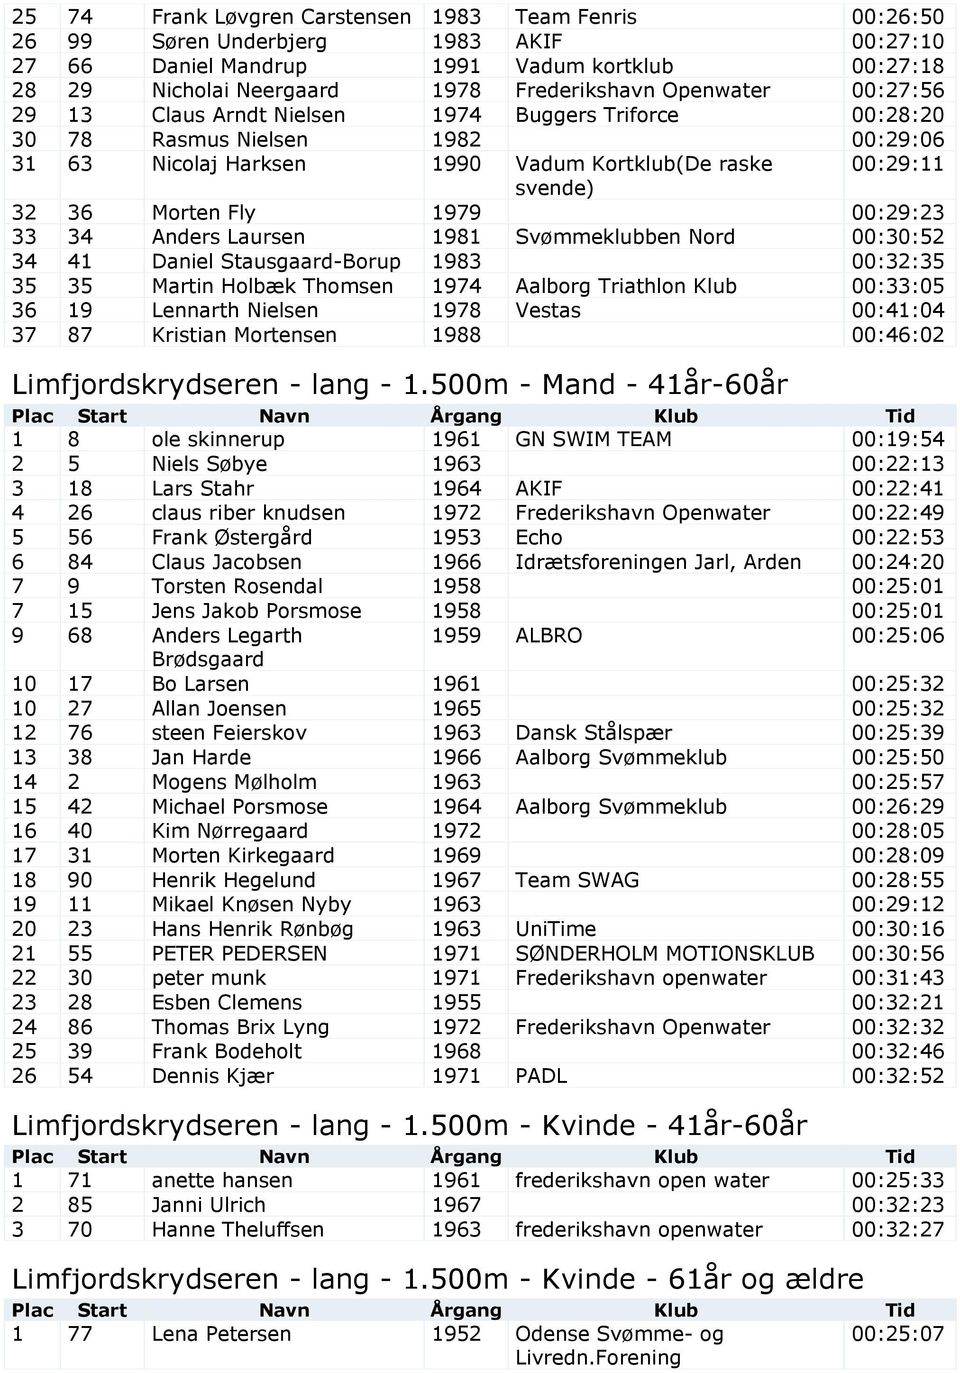 1979 00:29:23 33 34 Anders Laursen 1981 Svømmeklubben Nord 00:30:52 34 41 Daniel Stausgaard-Borup 1983 00:32:35 35 35 Martin Holbæk Thomsen 1974 Aalborg Triathlon Klub 00:33:05 36 19 Lennarth Nielsen